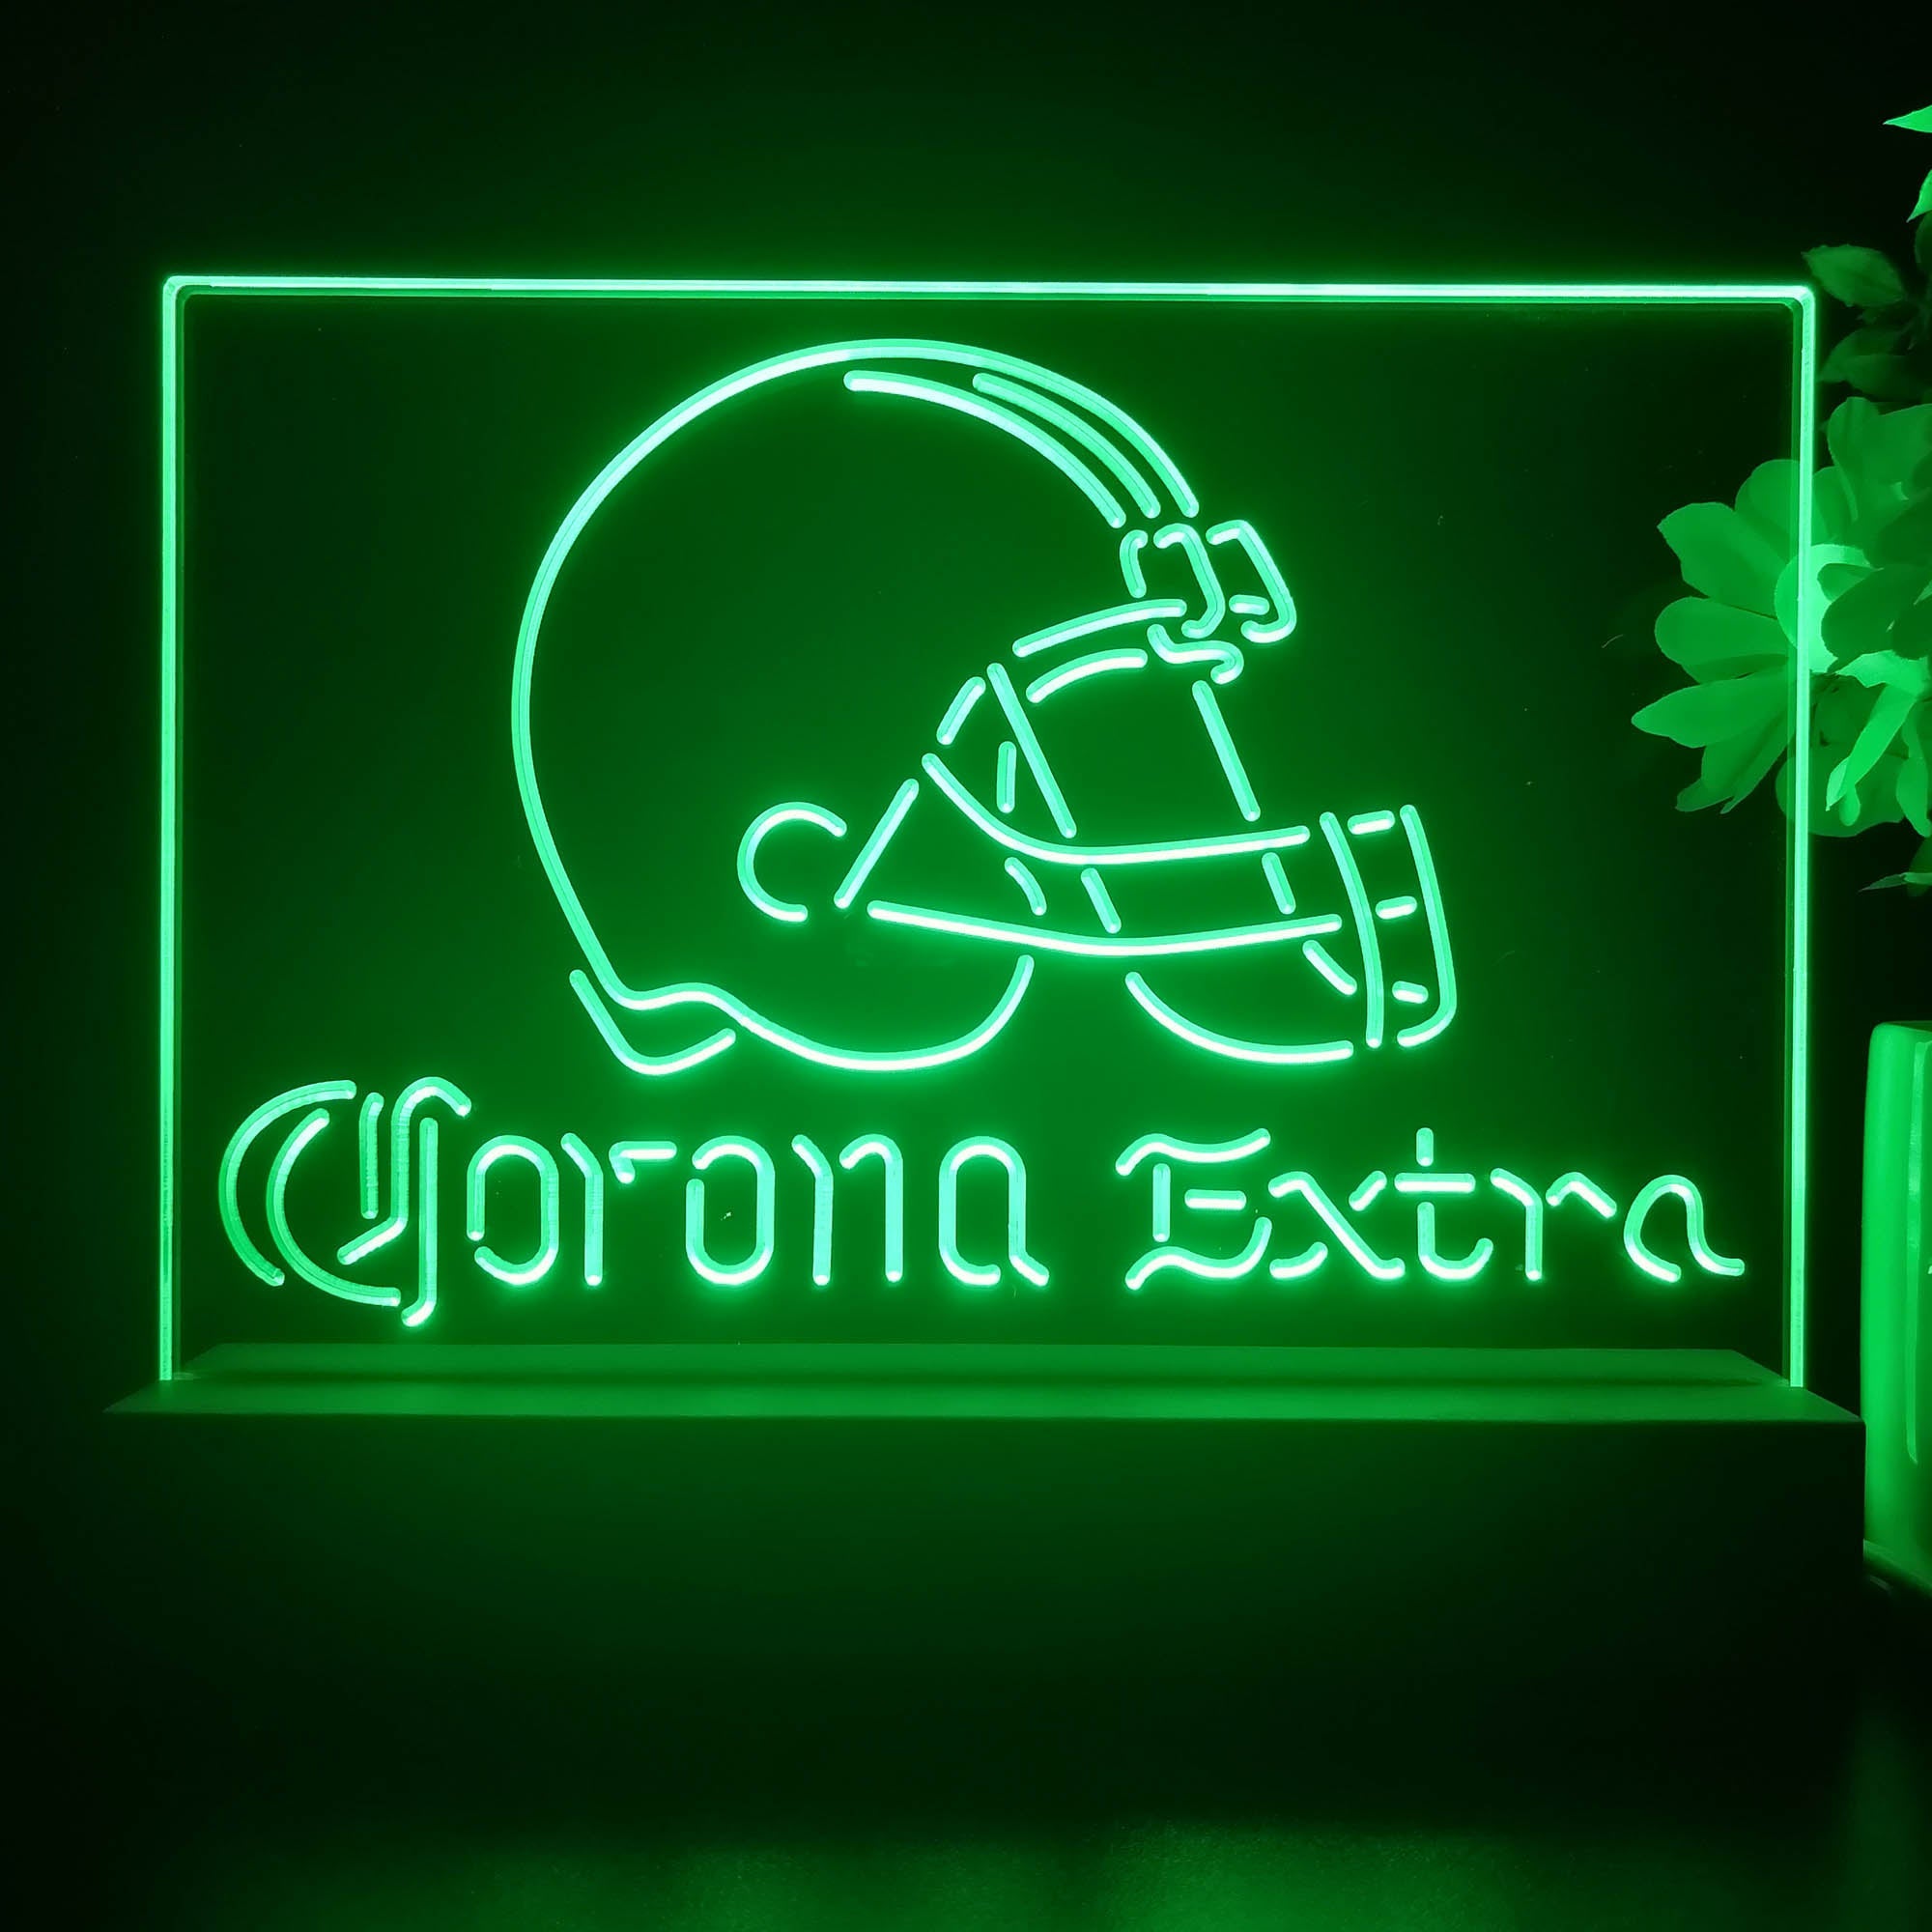 Corona Extra Bar Cleveland Browns Est. 1946 Night Light Pub Bar Lamp